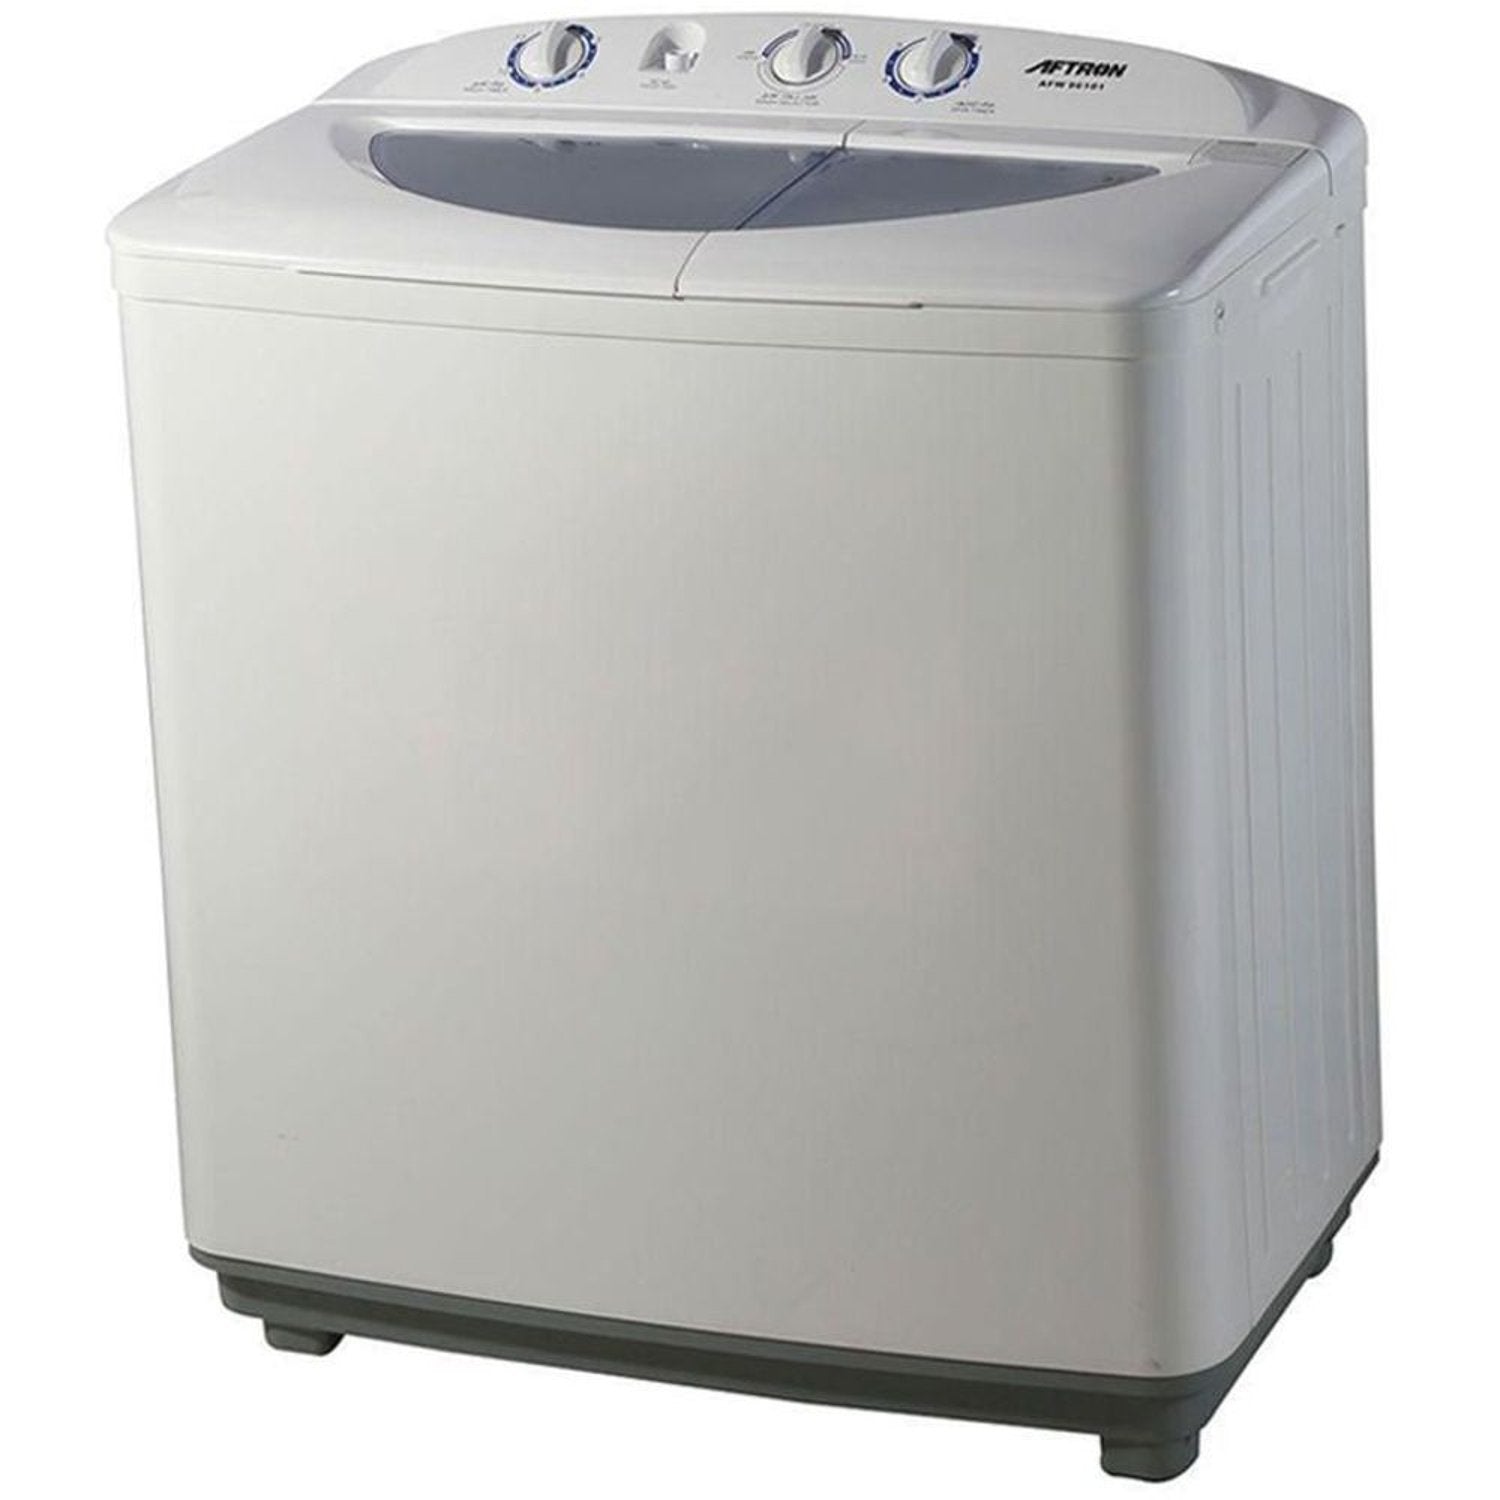 Aftron Top Load Semi Auto Washing Machine 9kg | Home Appliances & Electronics | Halabh.com